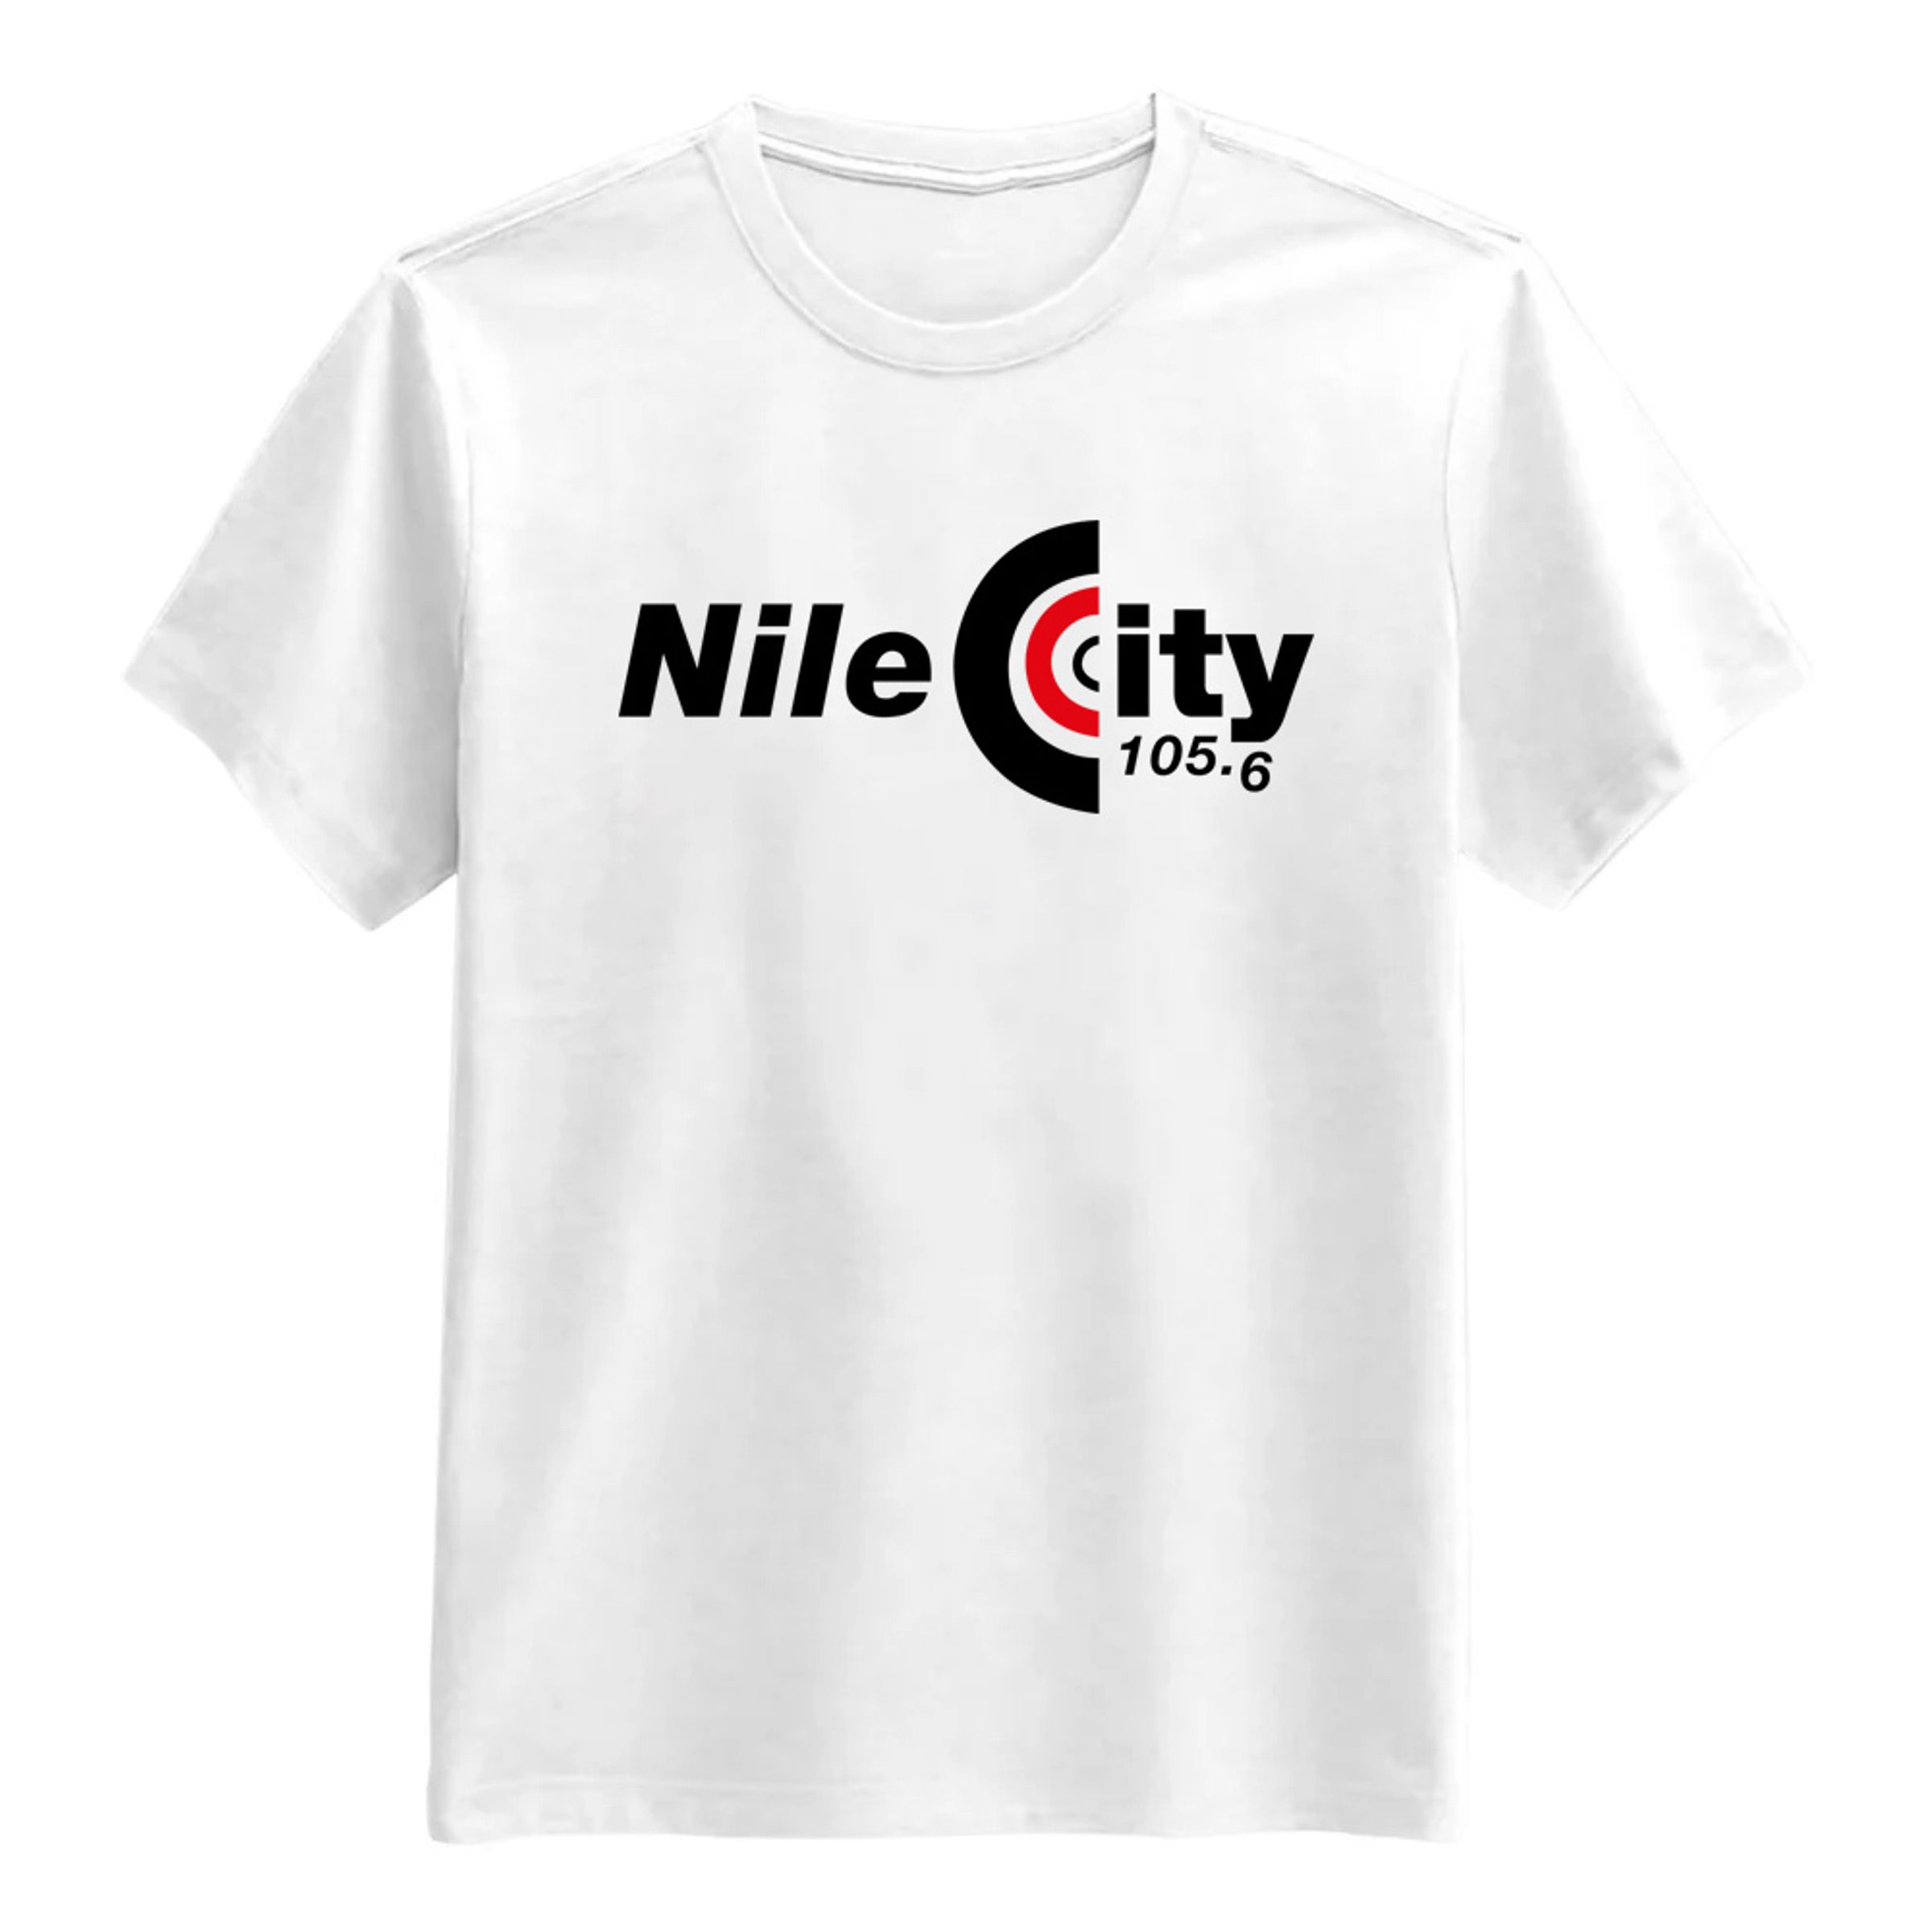 Nile City T-Shirt - Small